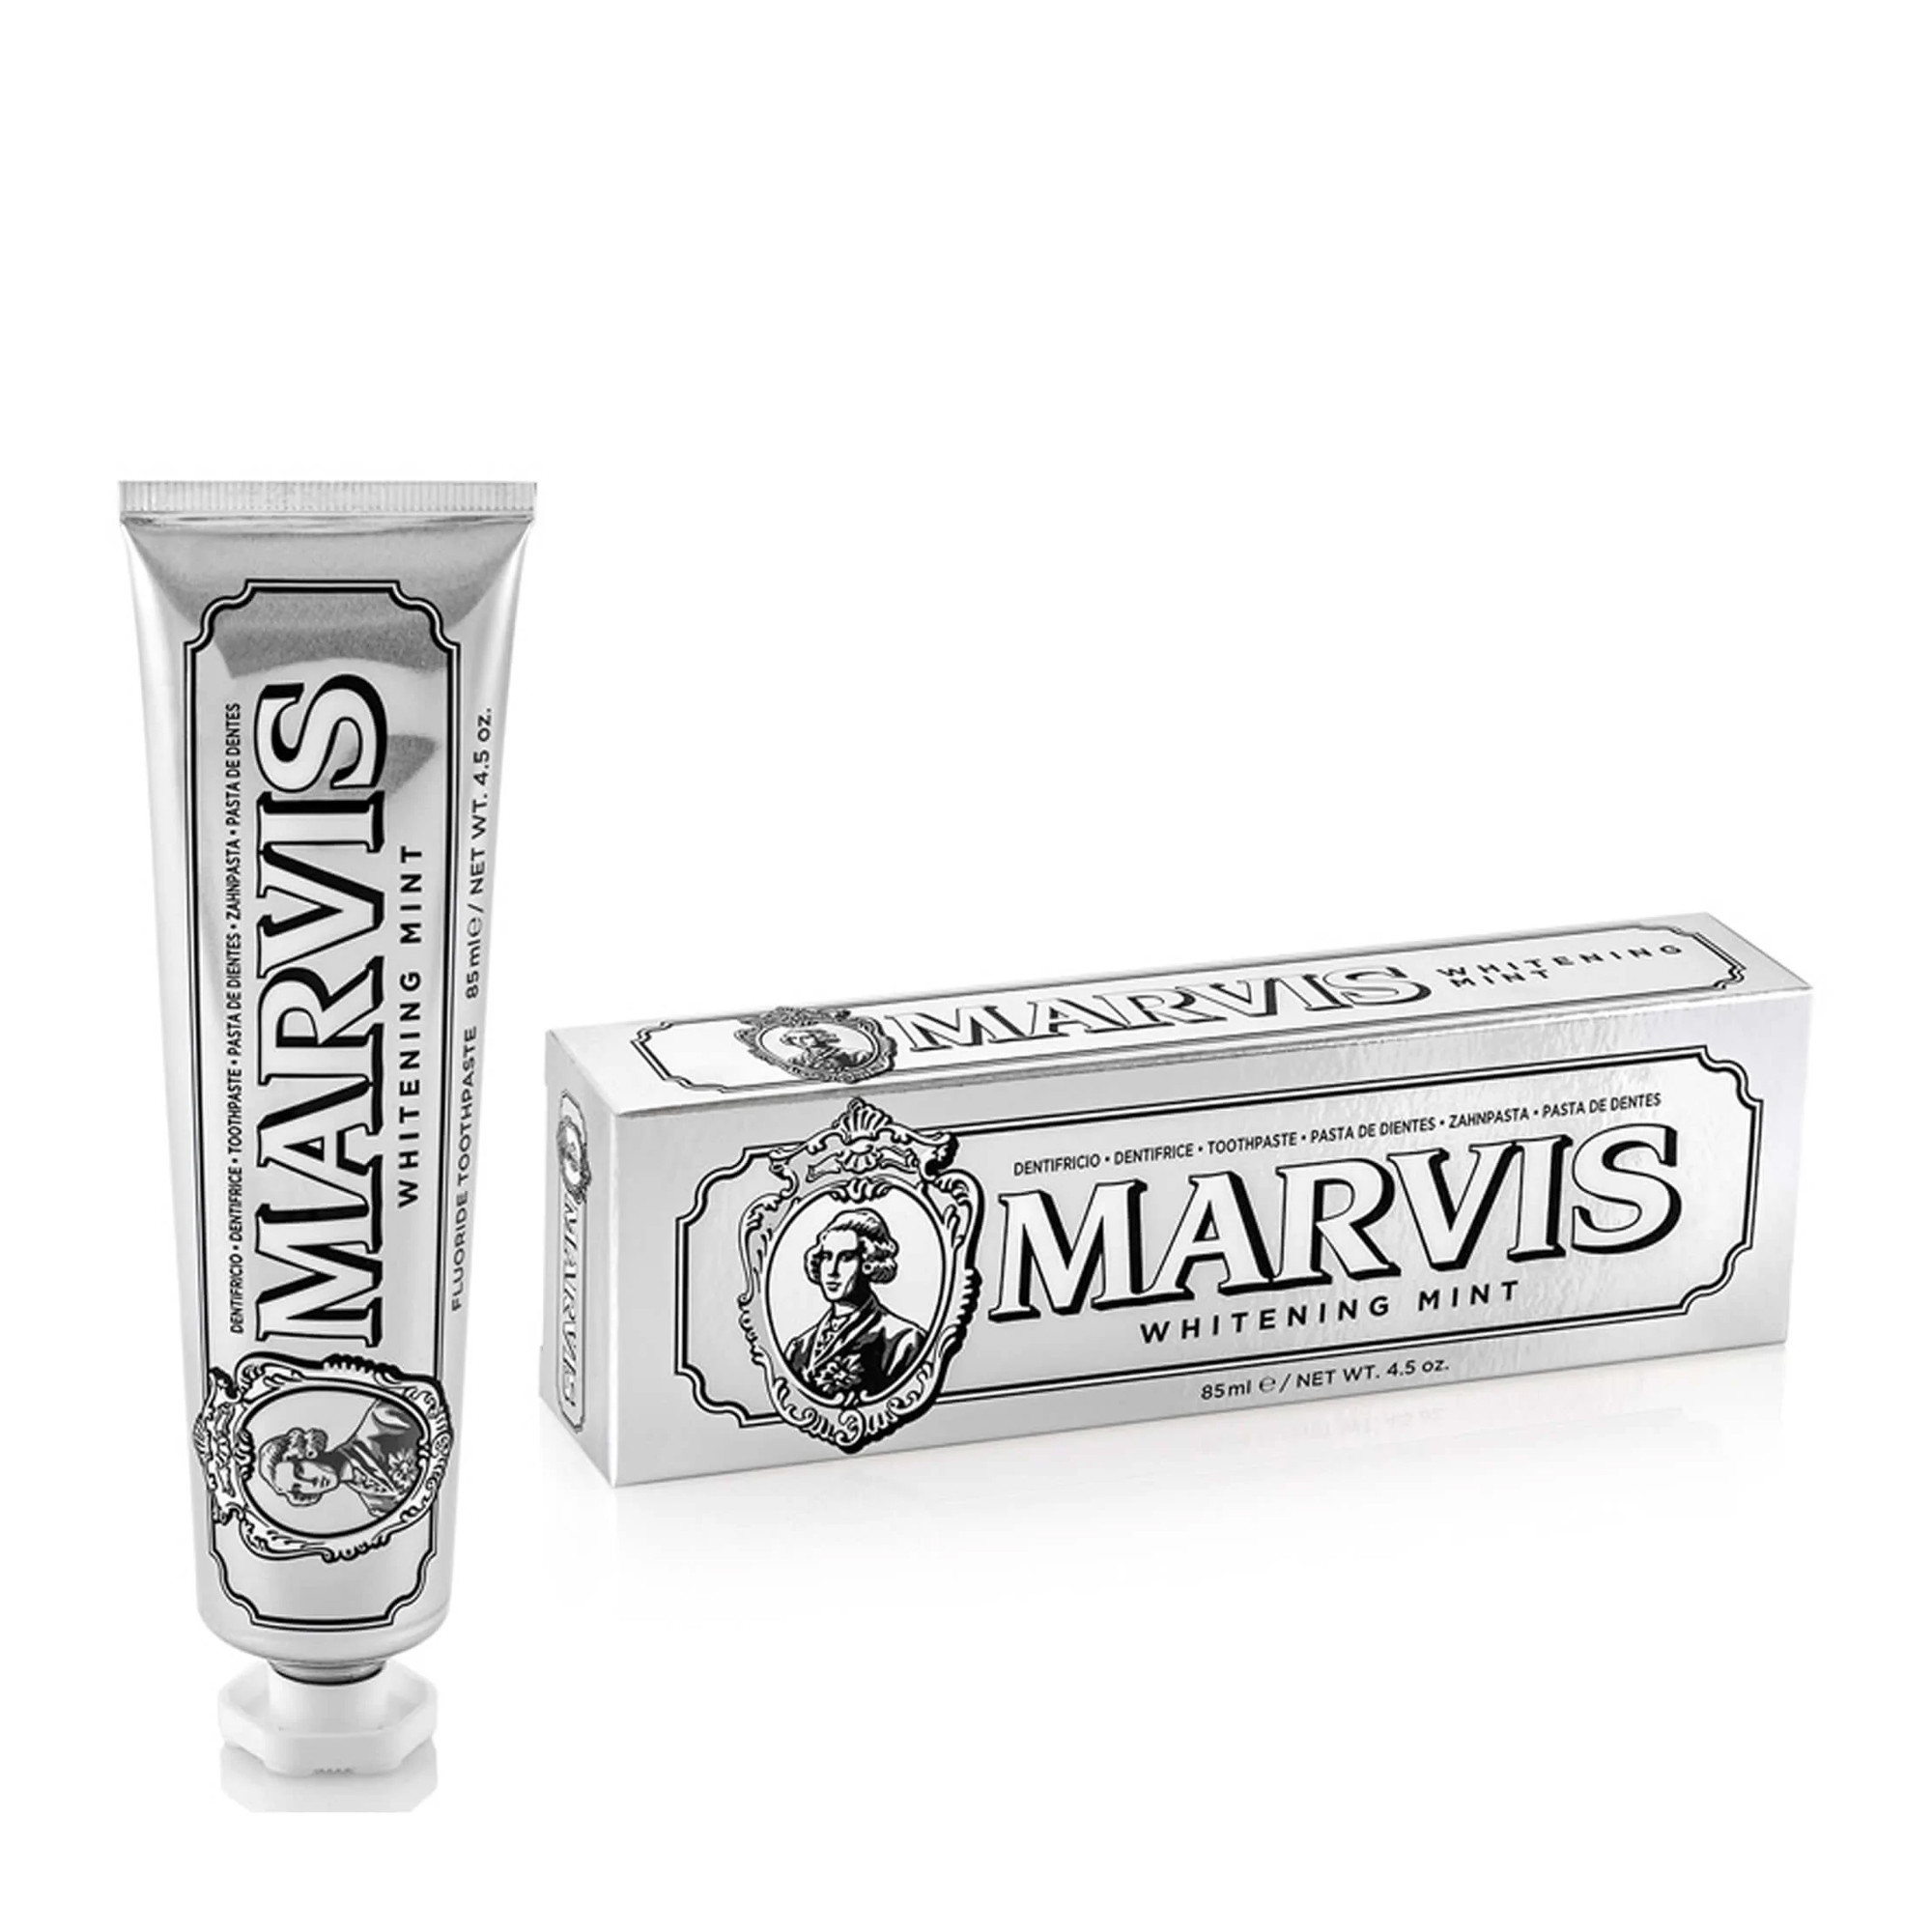 Marvis Whitening Mint - Зубная паста Мята, отбеливающий эффект